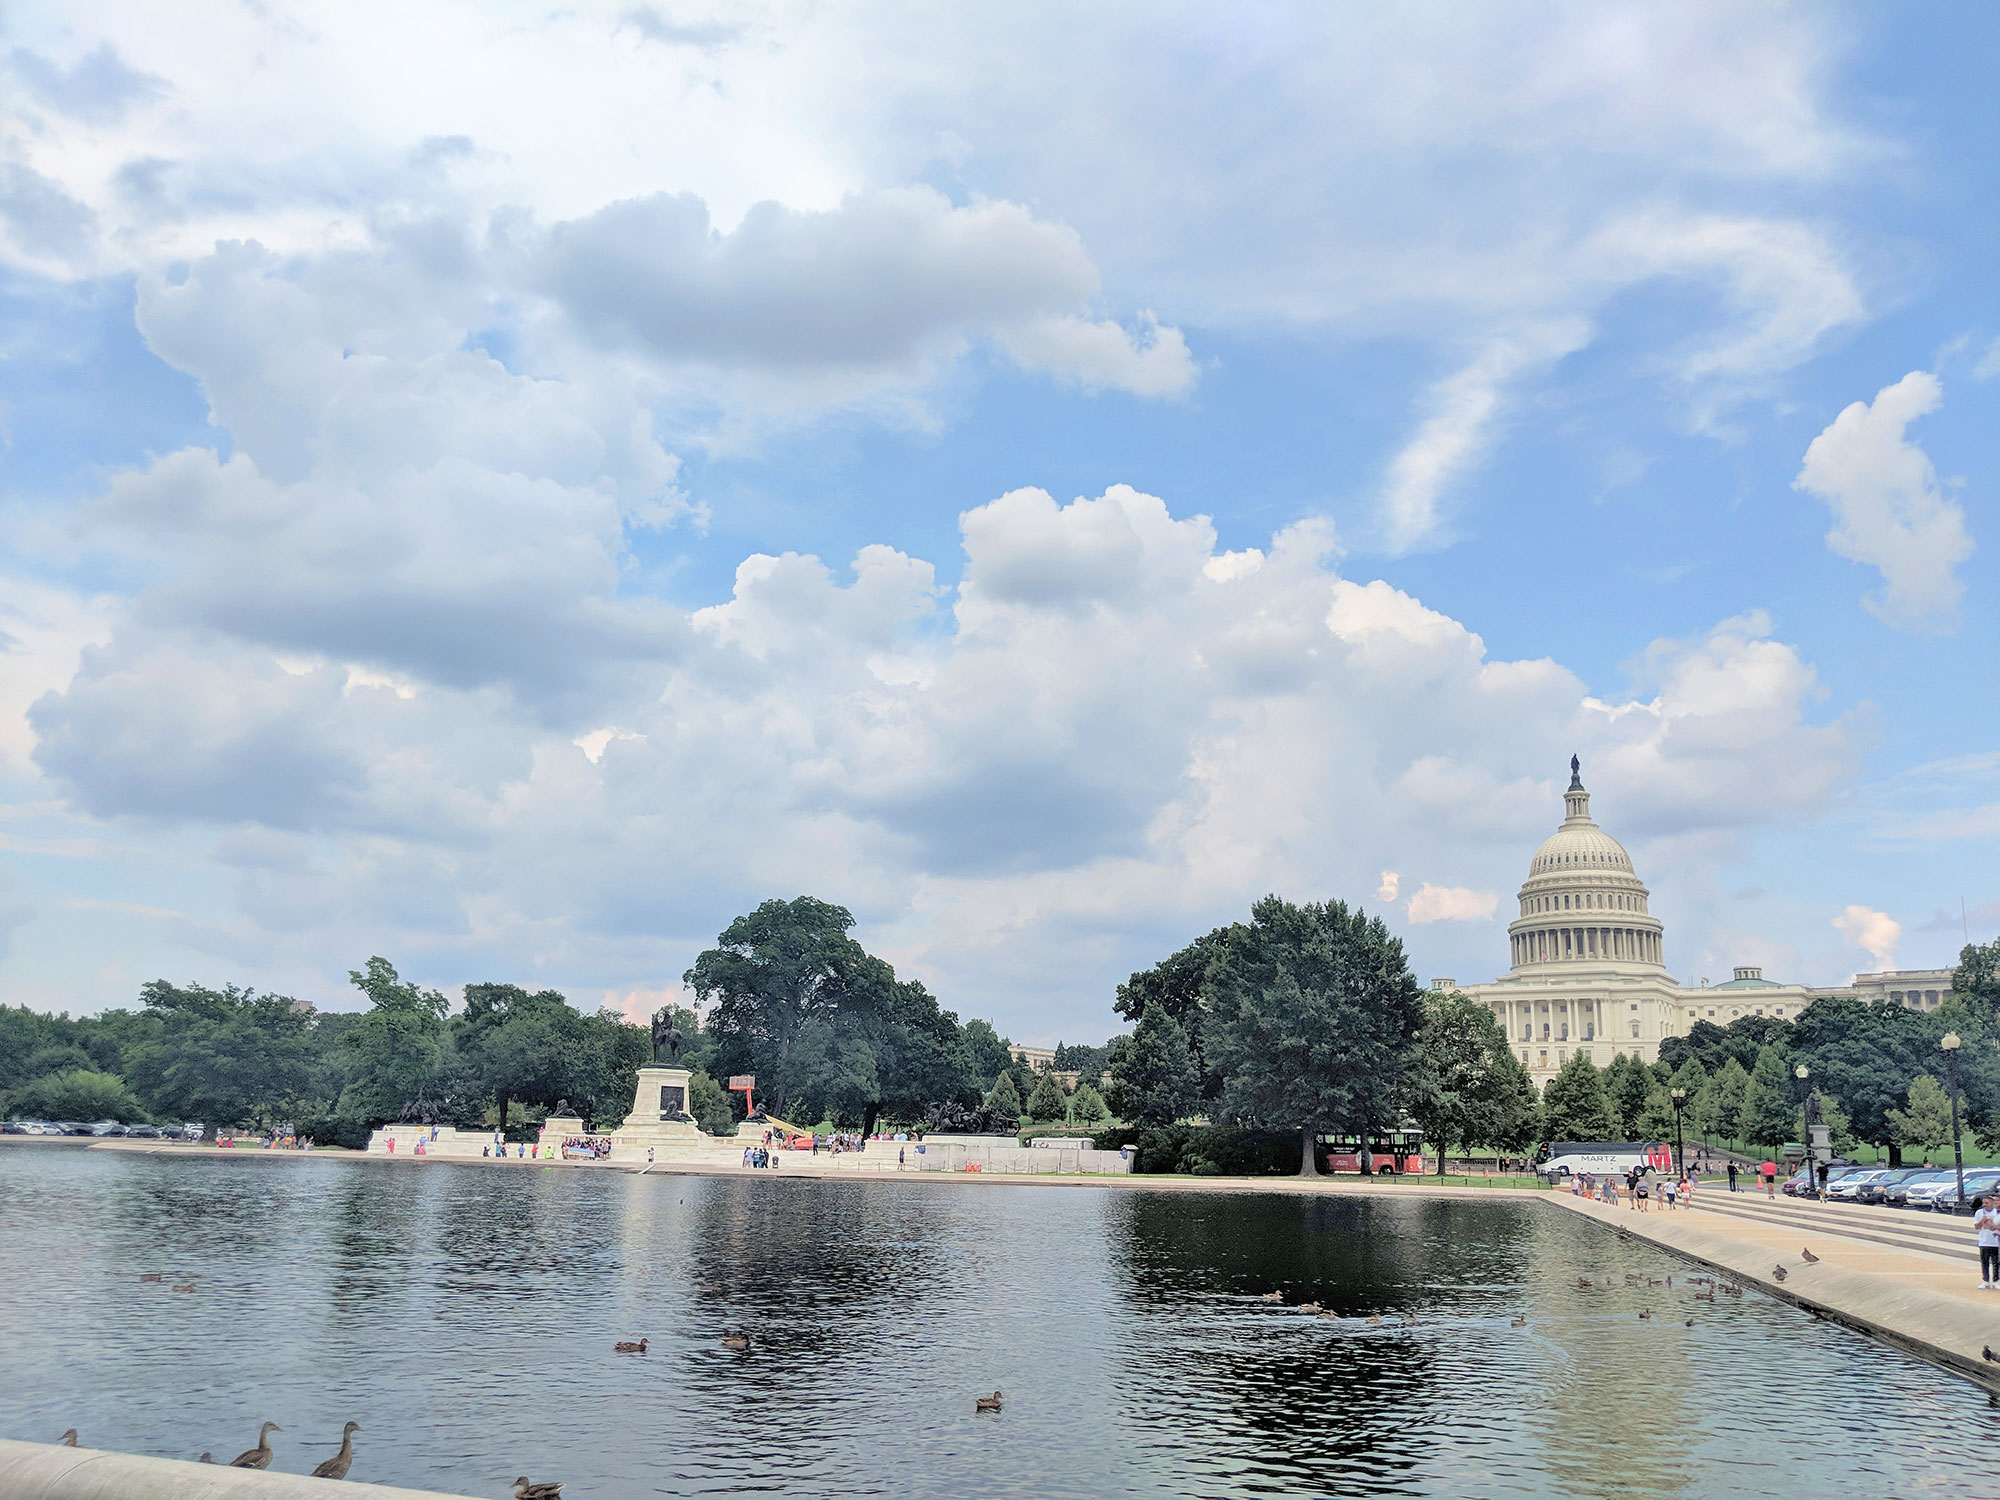 The U.S. Capitol's reflecting pool, and plenty of ducks.